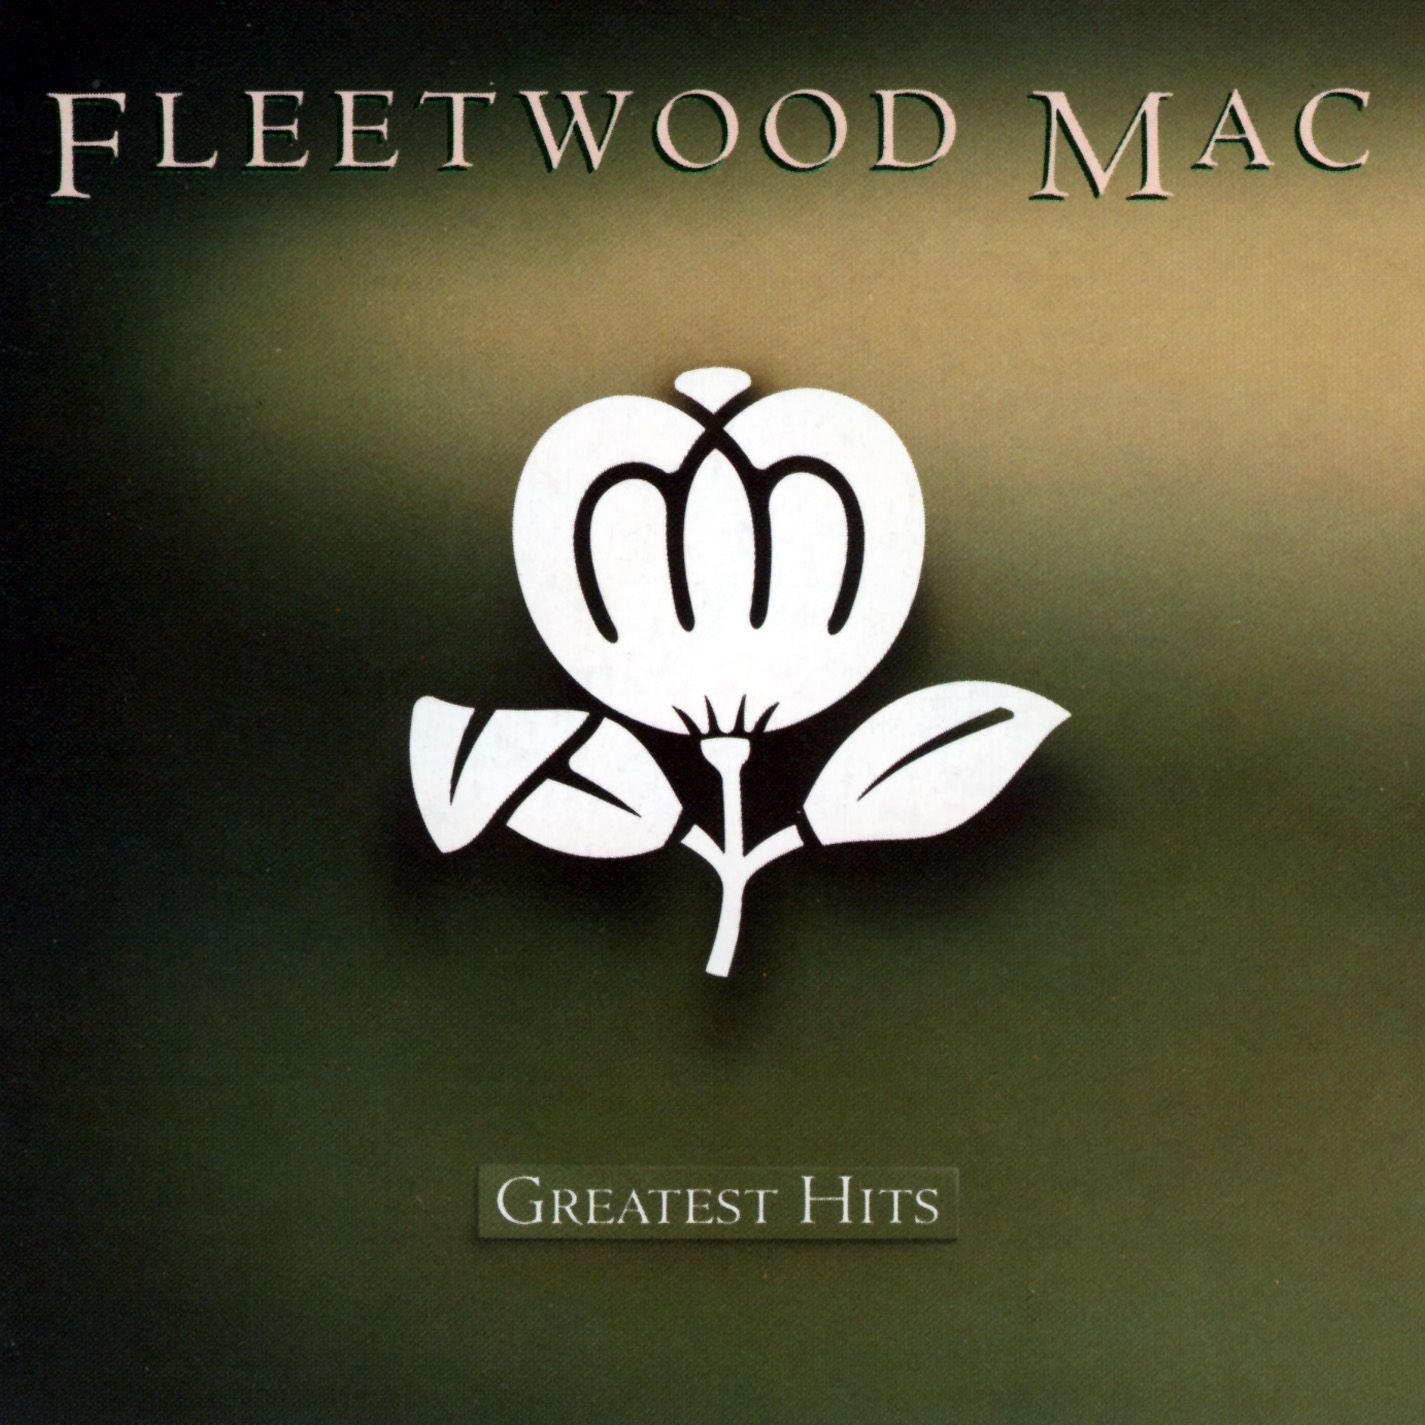 fleetwood mac full album free download